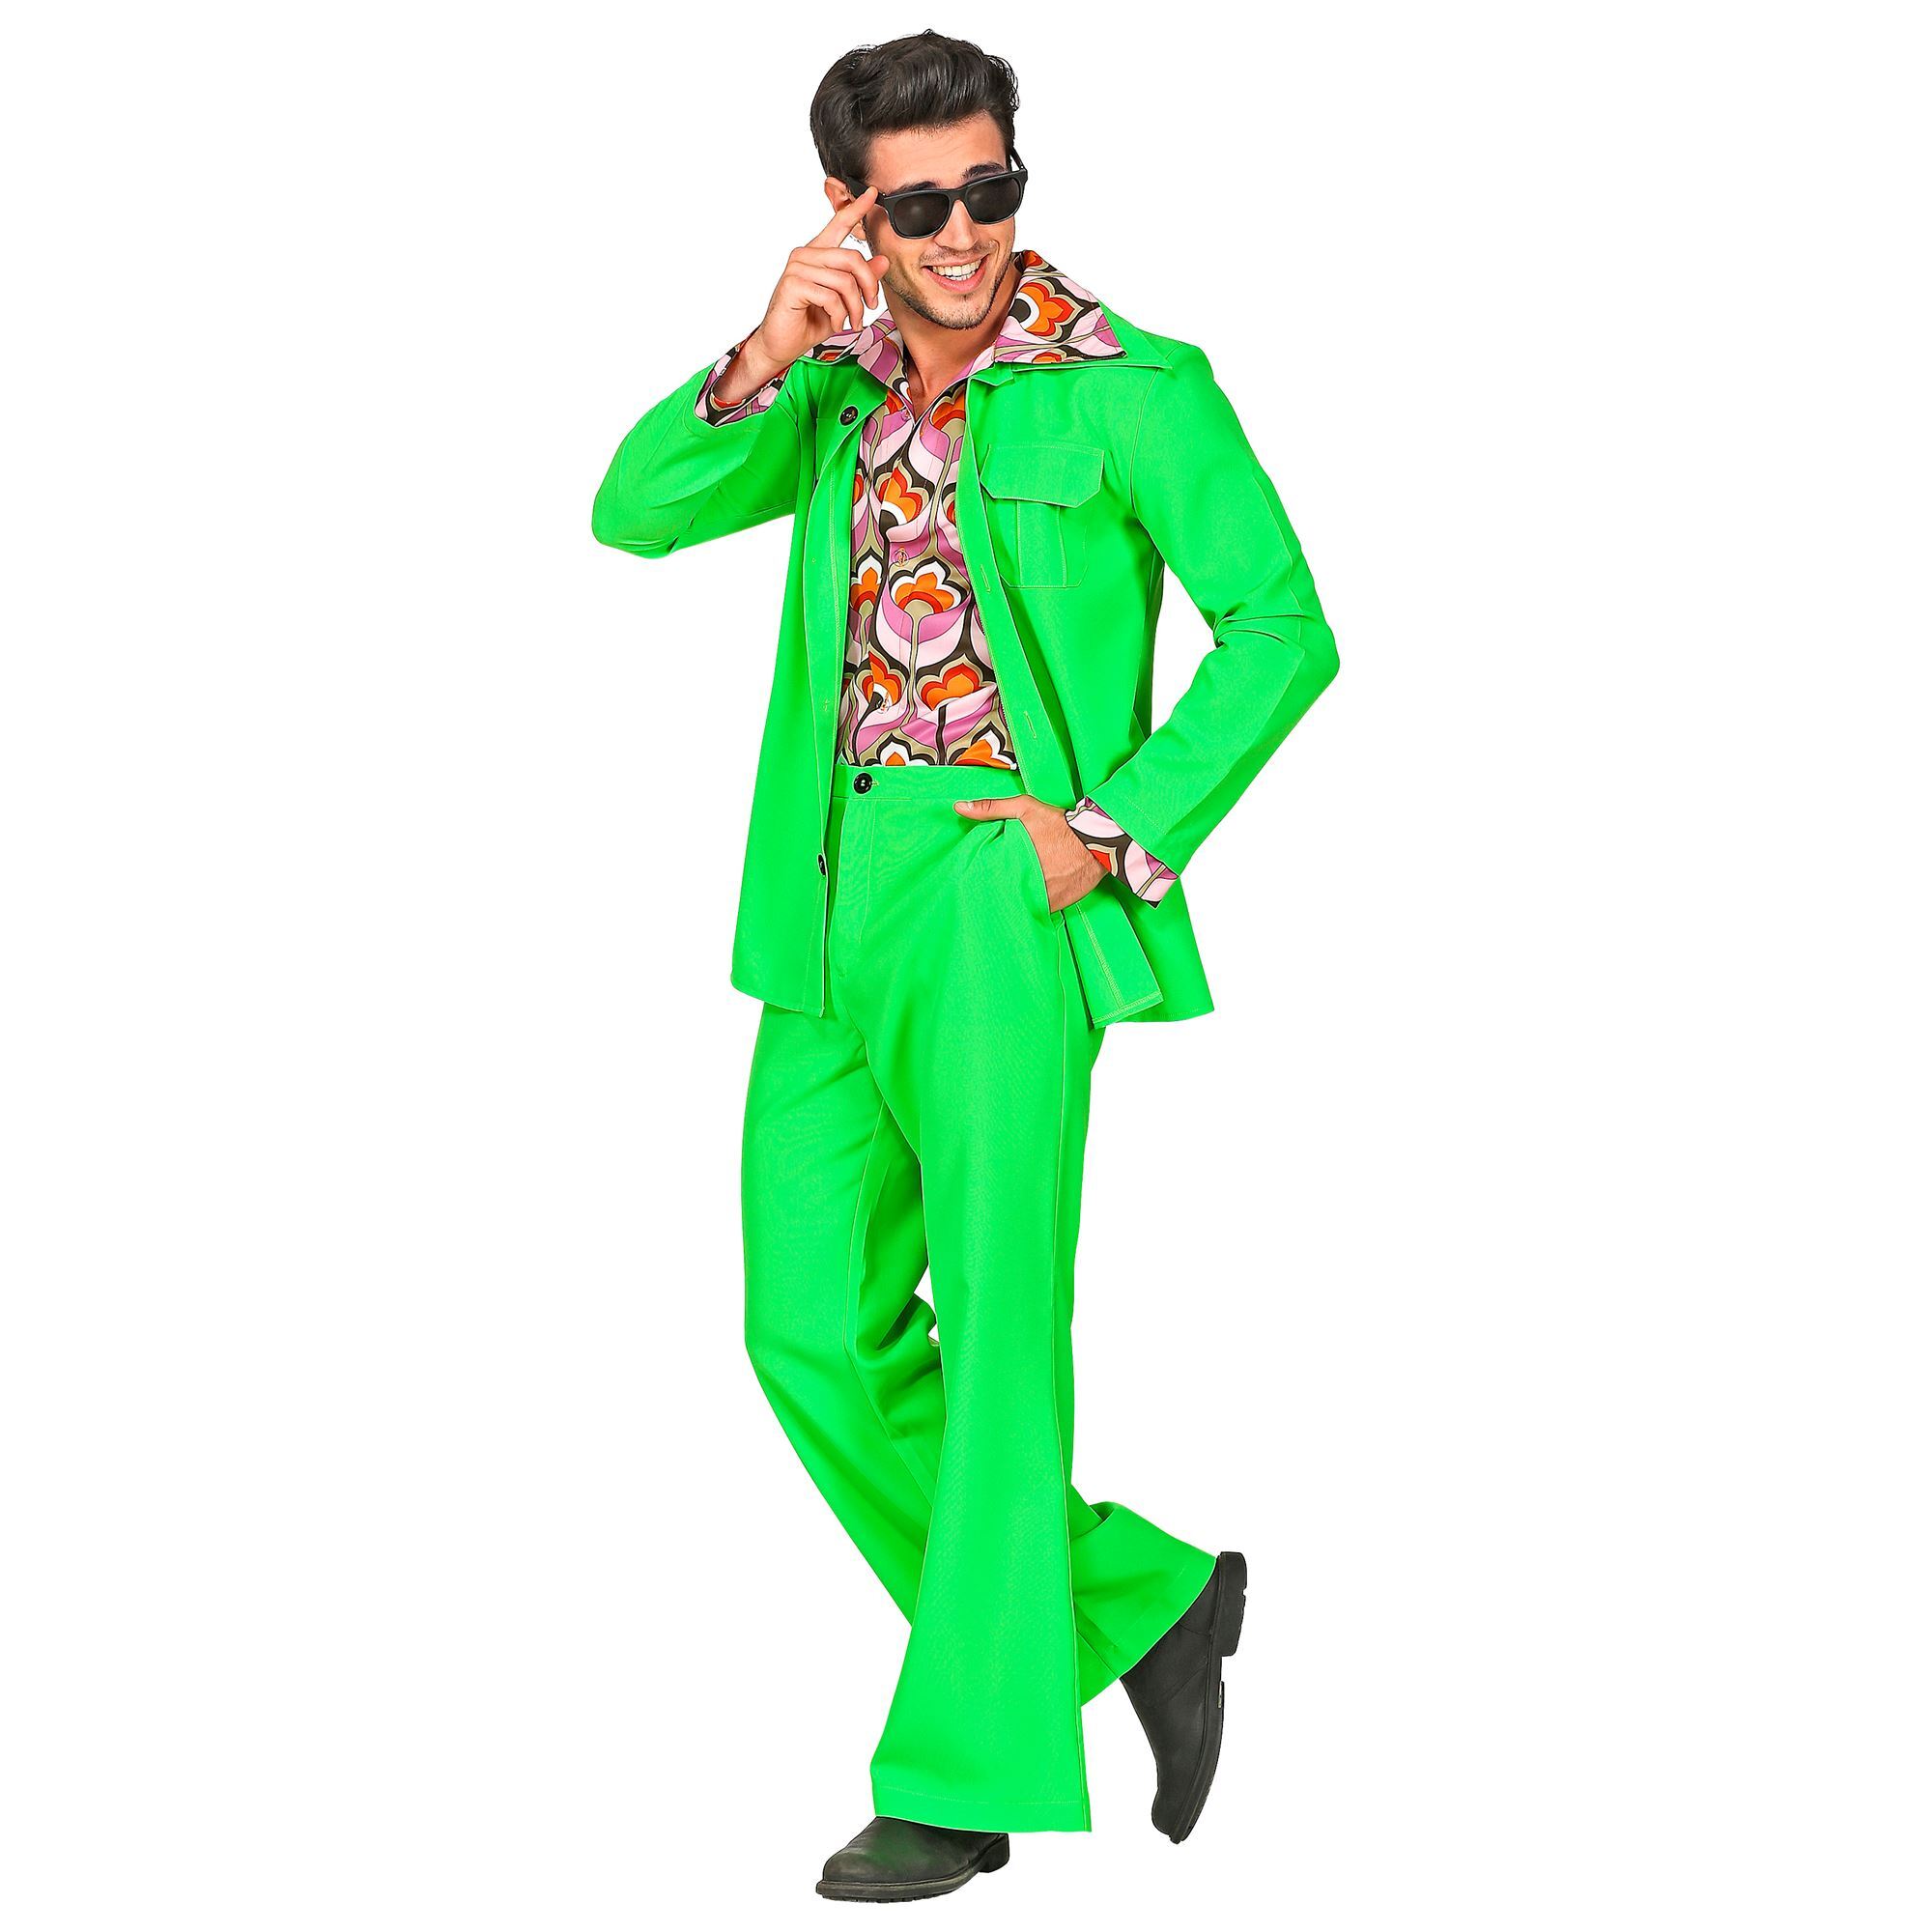 Disco saterday night fever kostuum kikker groen man